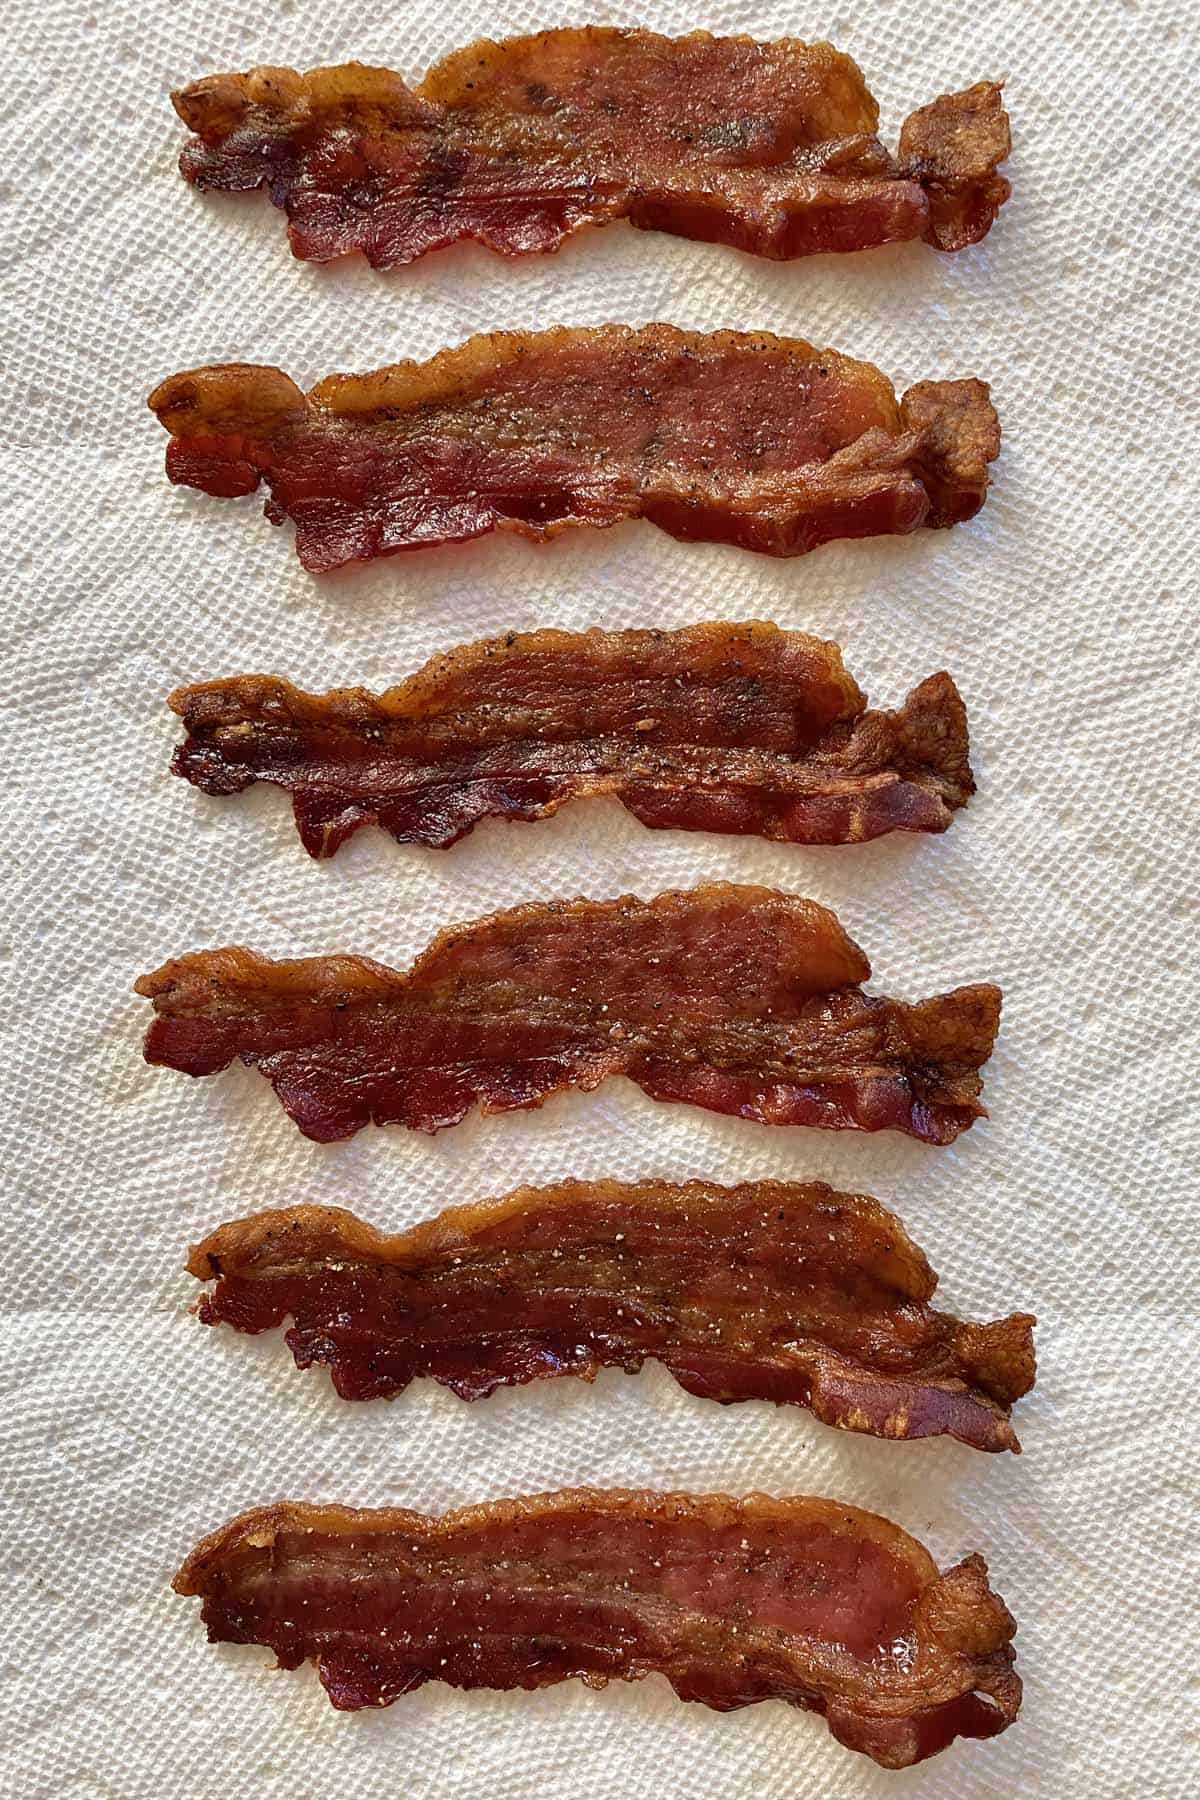 https://bensabaconlovers.com/wp-content/uploads/2021/09/crisply-cooked-bacon-draining.jpg